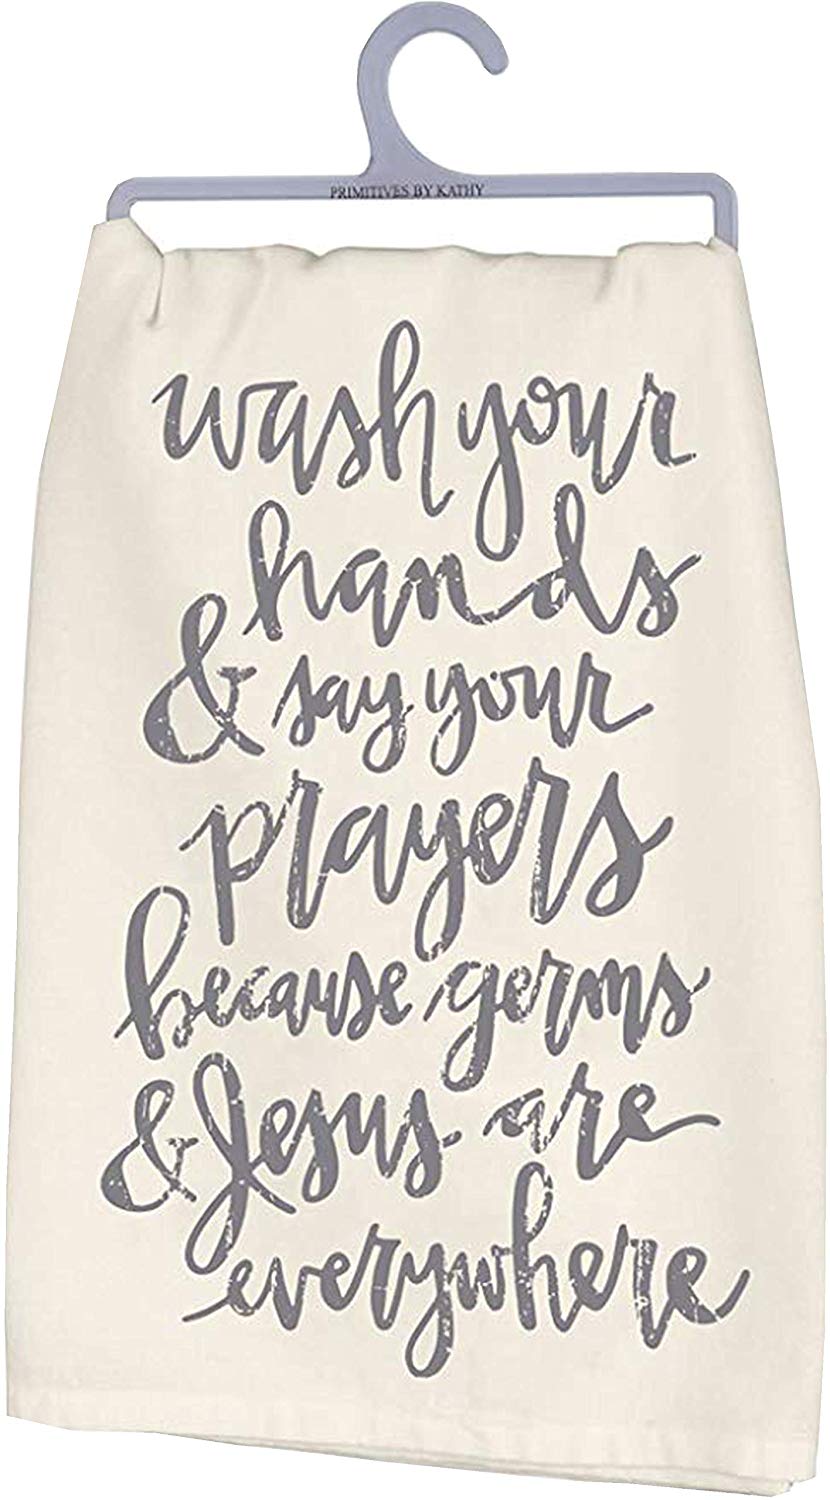 Primitives by Kathy Cotton Dish Towel - Wash Your Hands